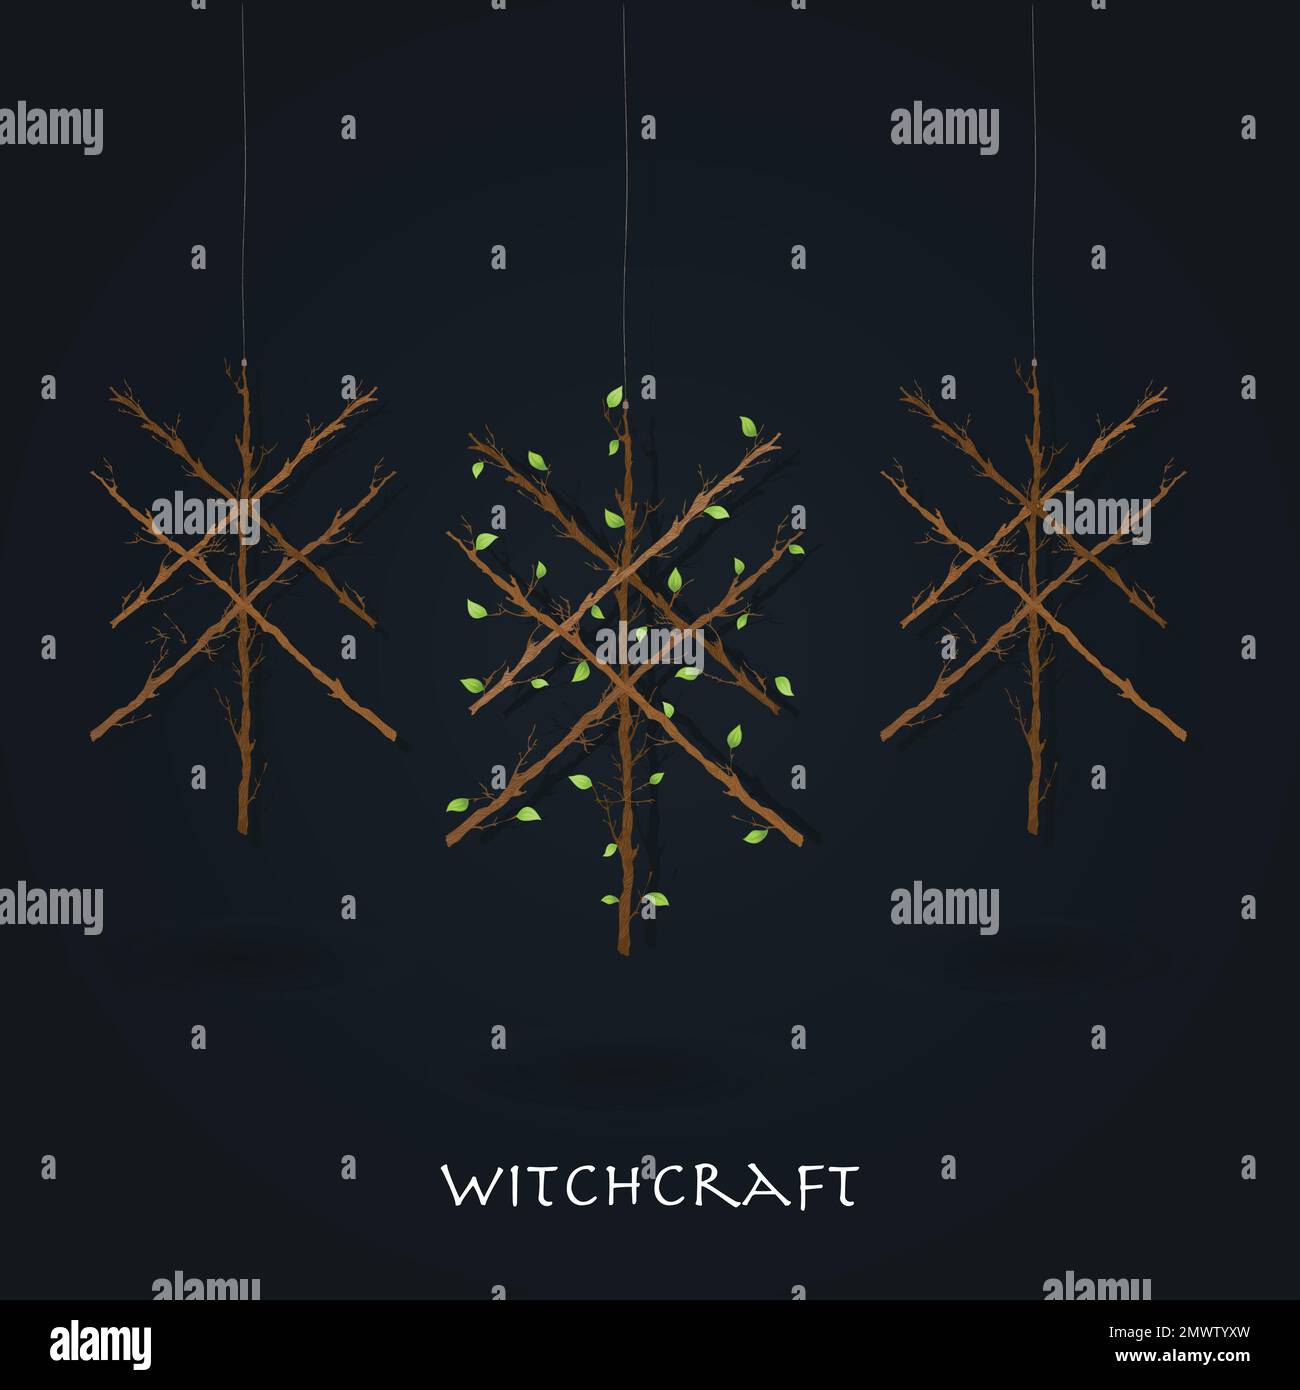 Witchcraft wooden symbols Stock Vector